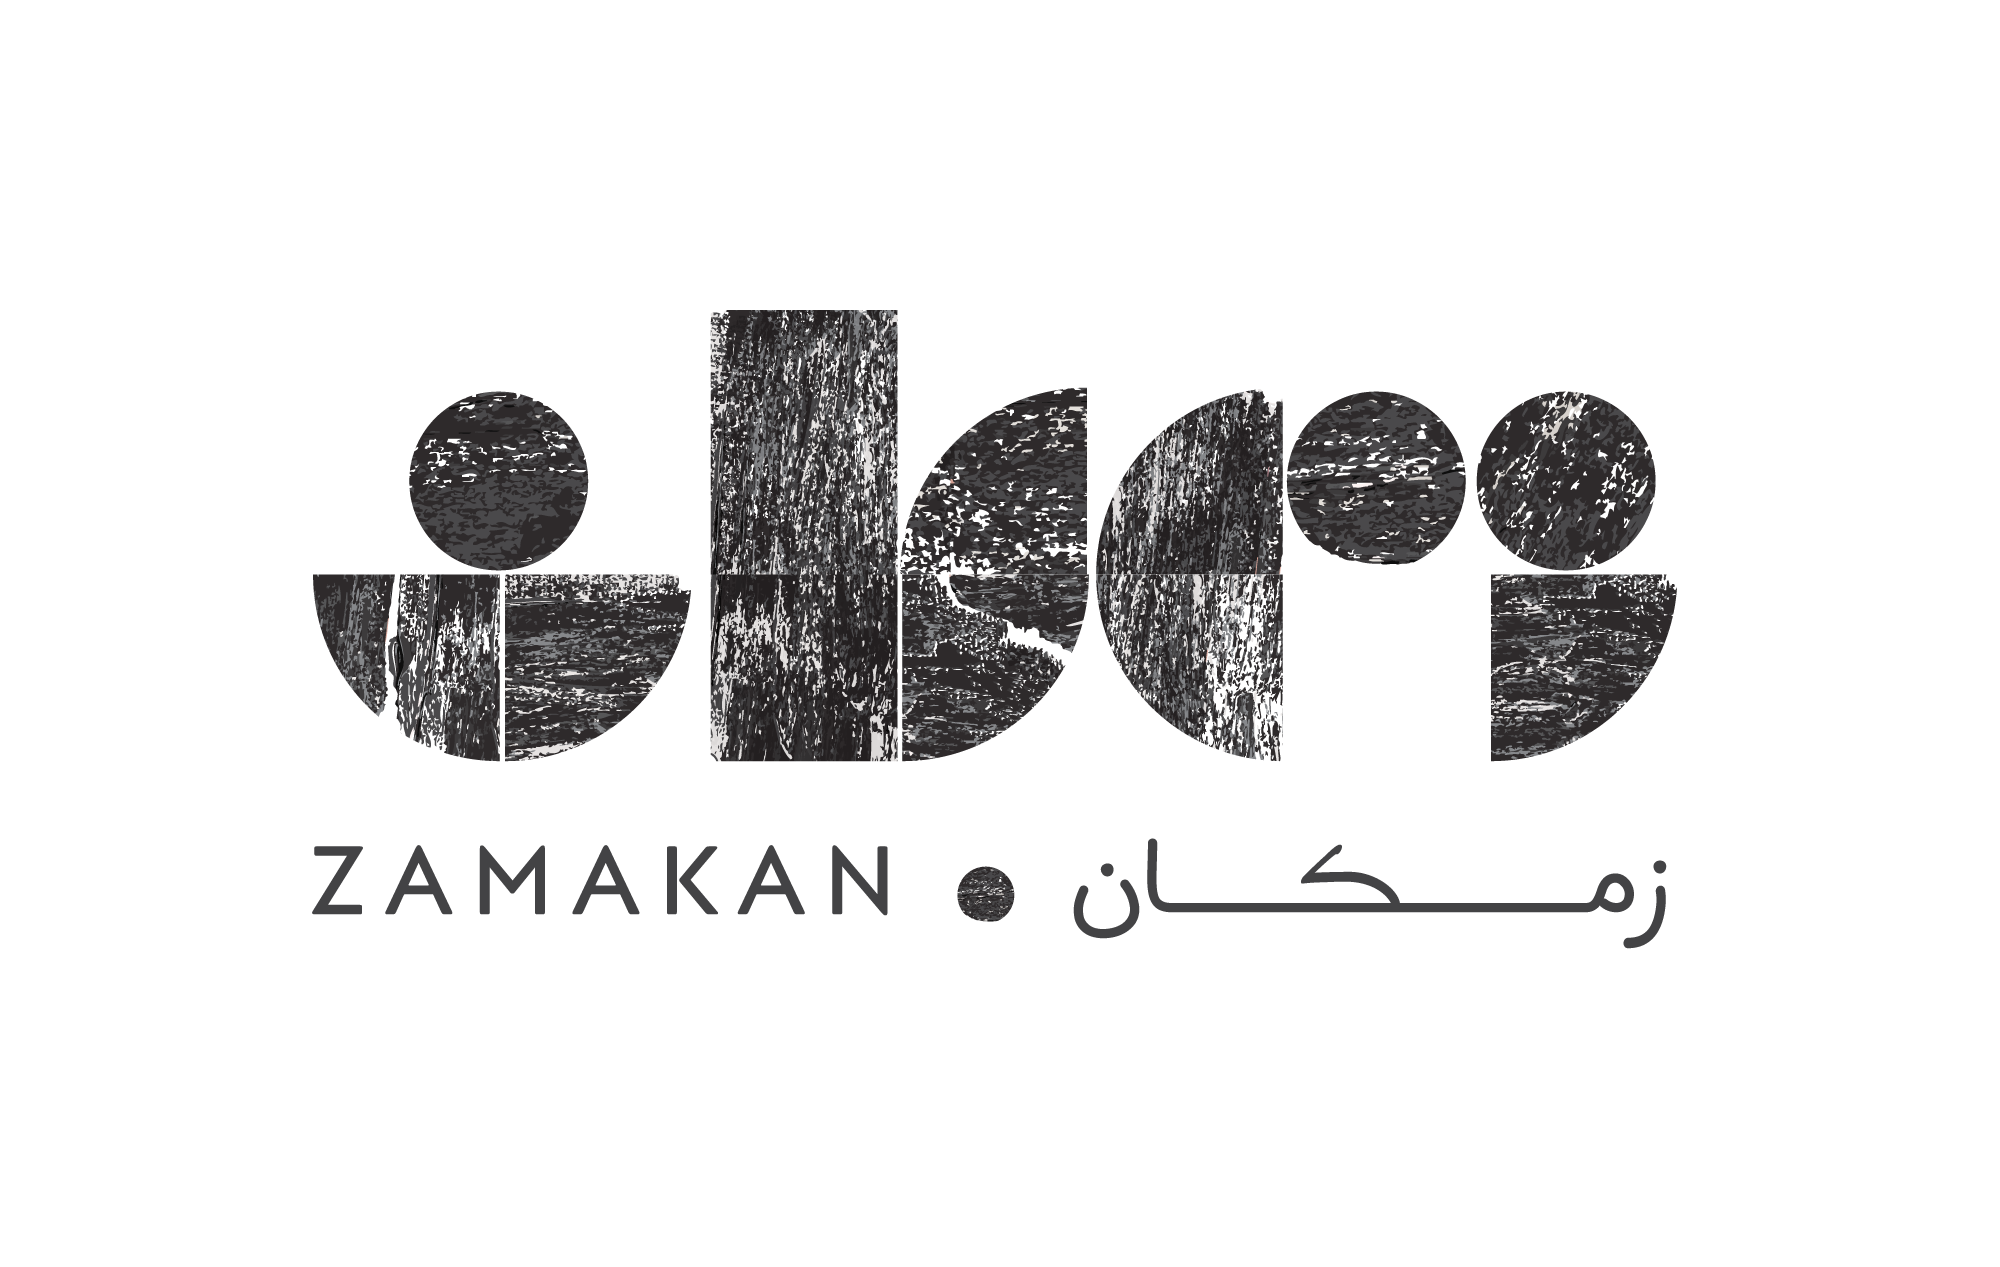 Zamakan black logo